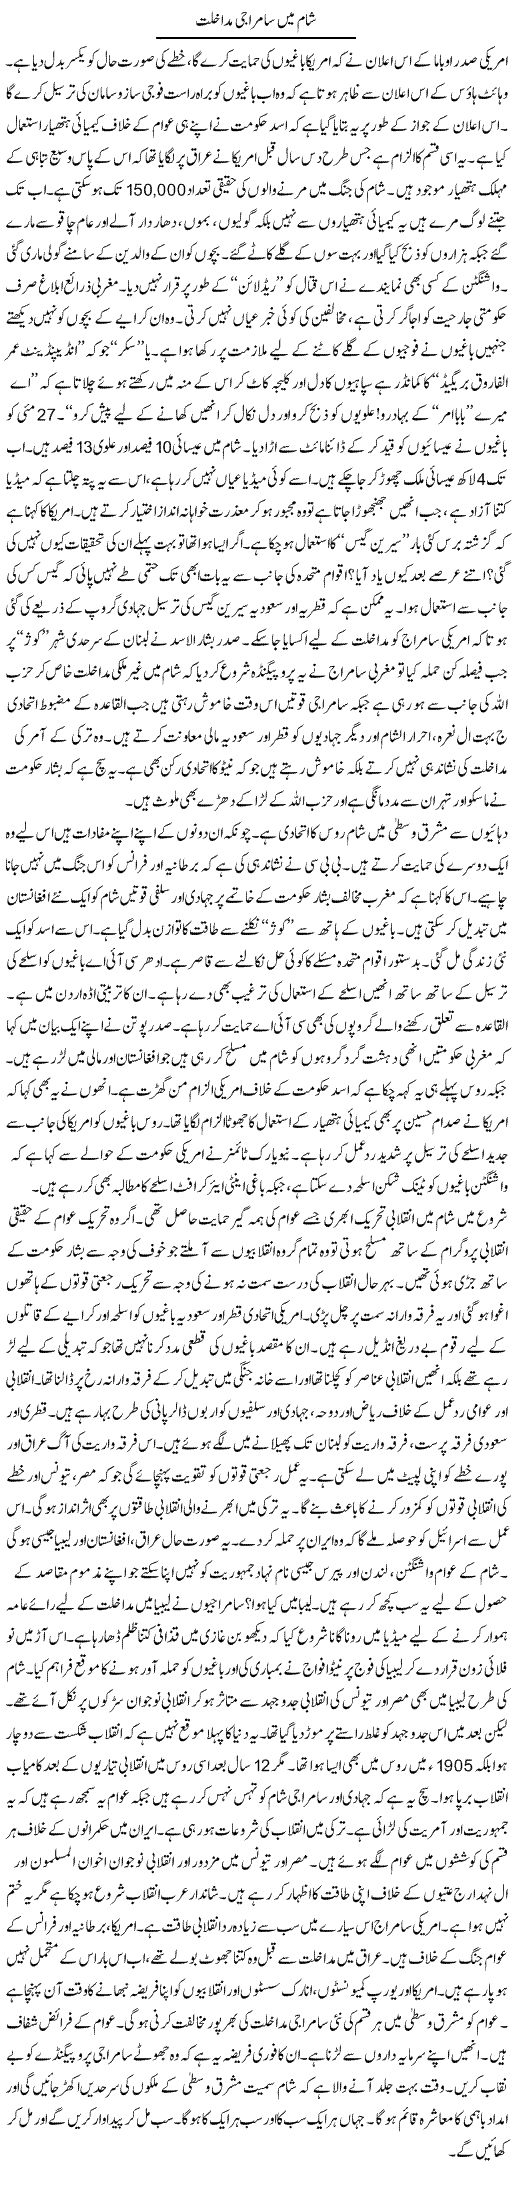 Sham Mai Samra Ji Mudakhlat | Zubair Rehman | Daily Urdu Columns